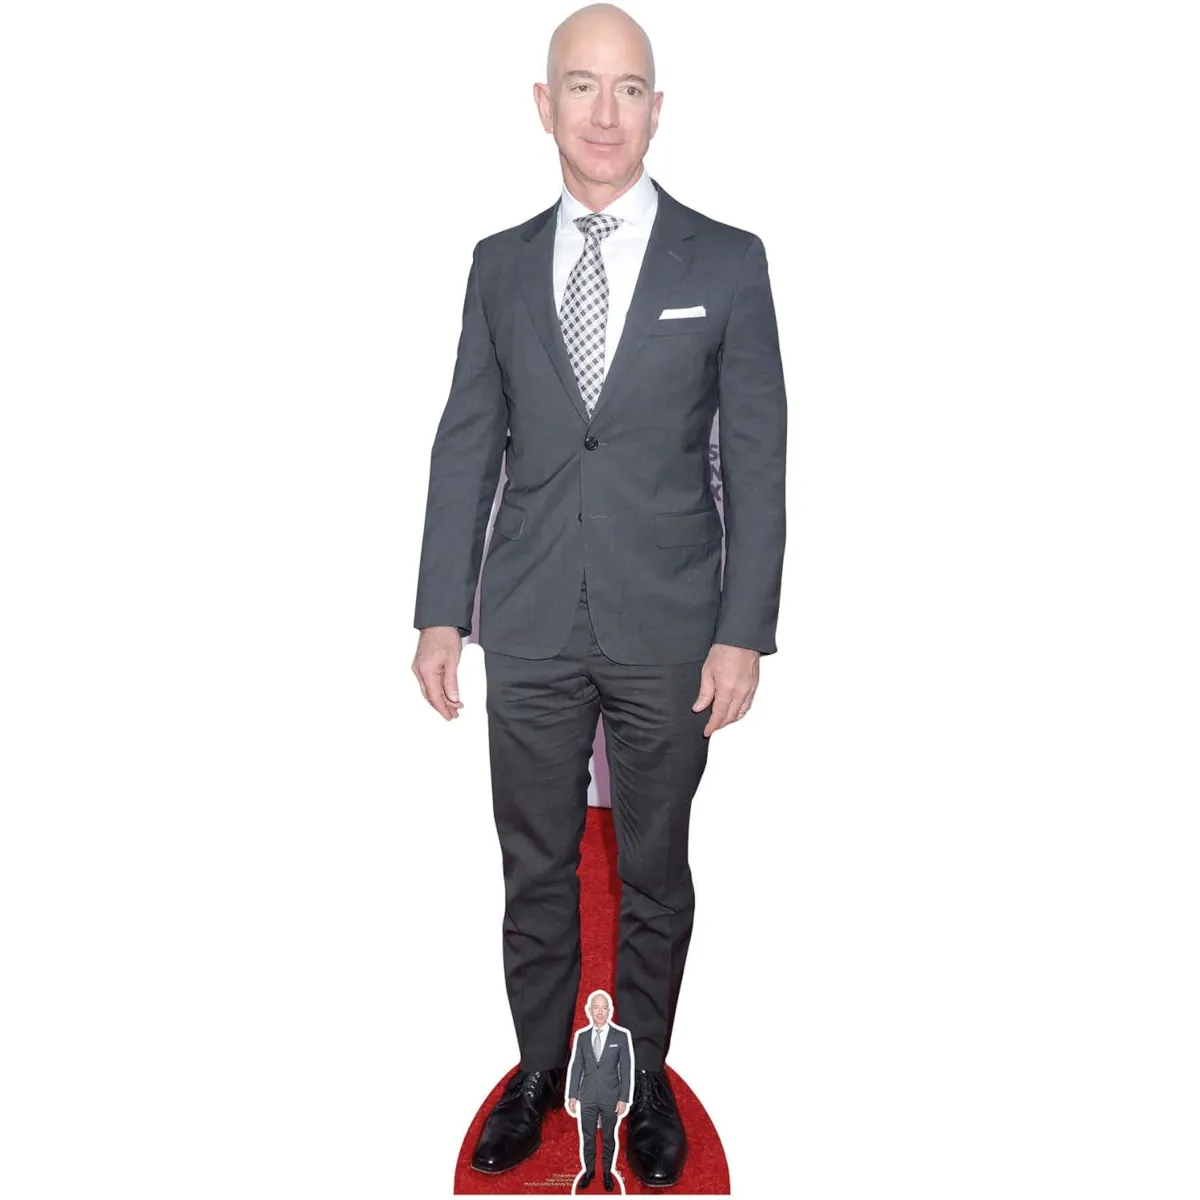 CS864 Jeff Bezos (Executive Chairman of Amazon) Lifesize + Mini Cardboard Cutout Standee Front